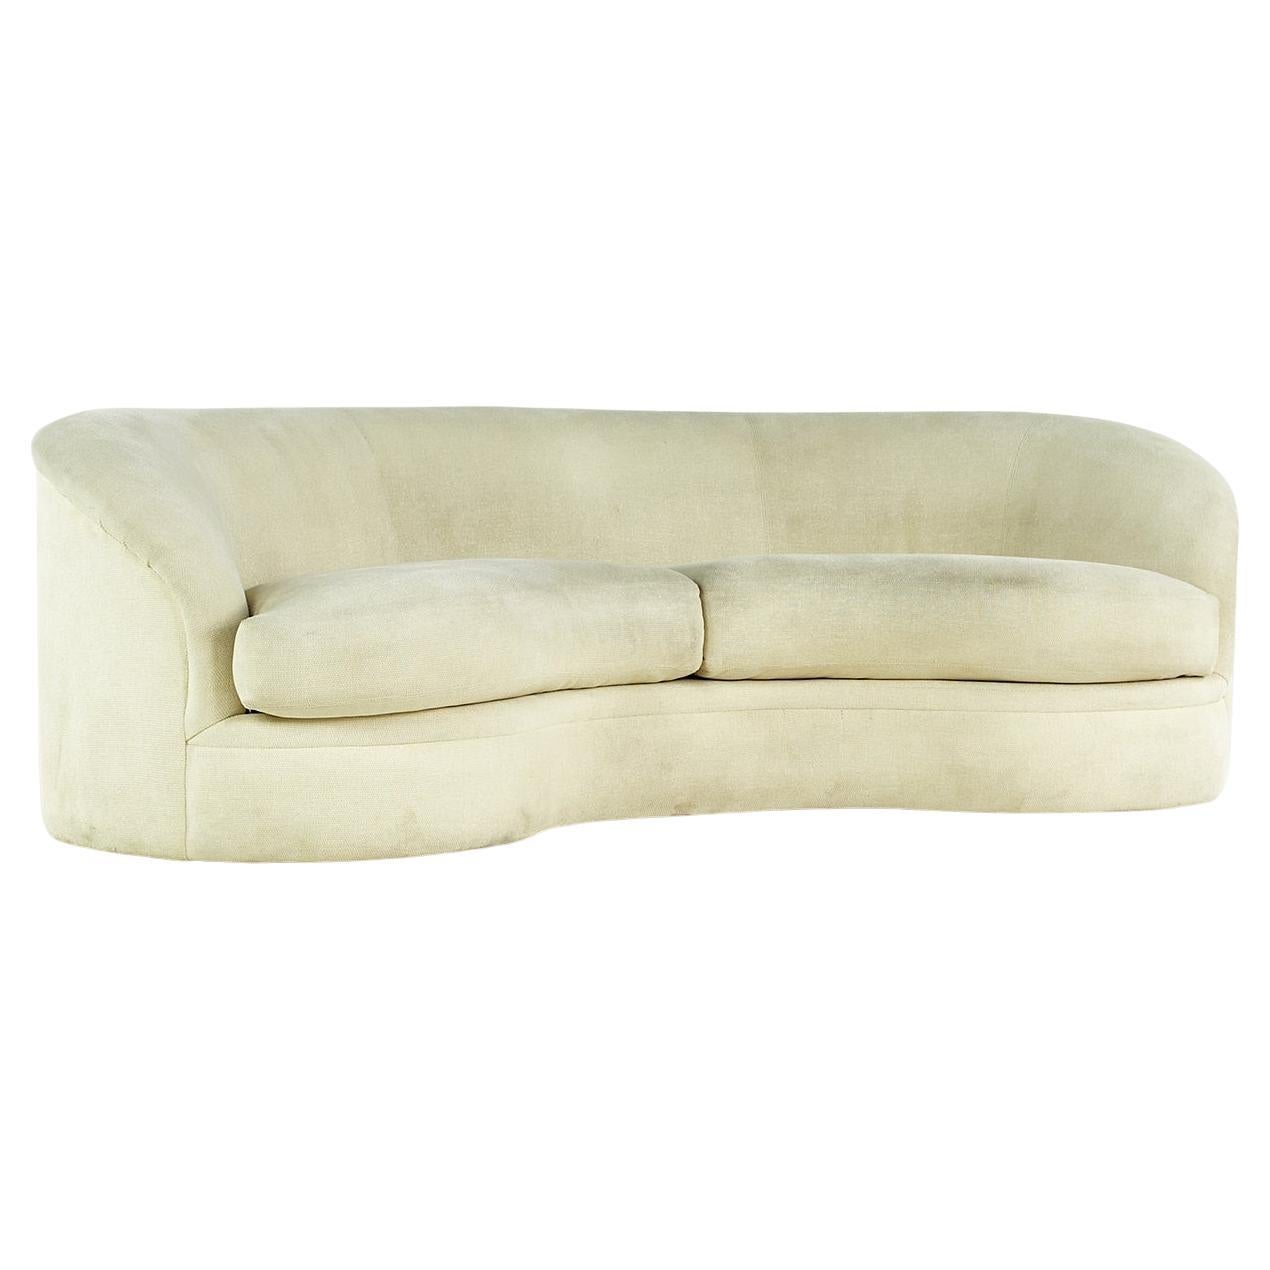 Kagan Style Directional Furniture Midcentury Biomorphic Kidney Sofa For Sale